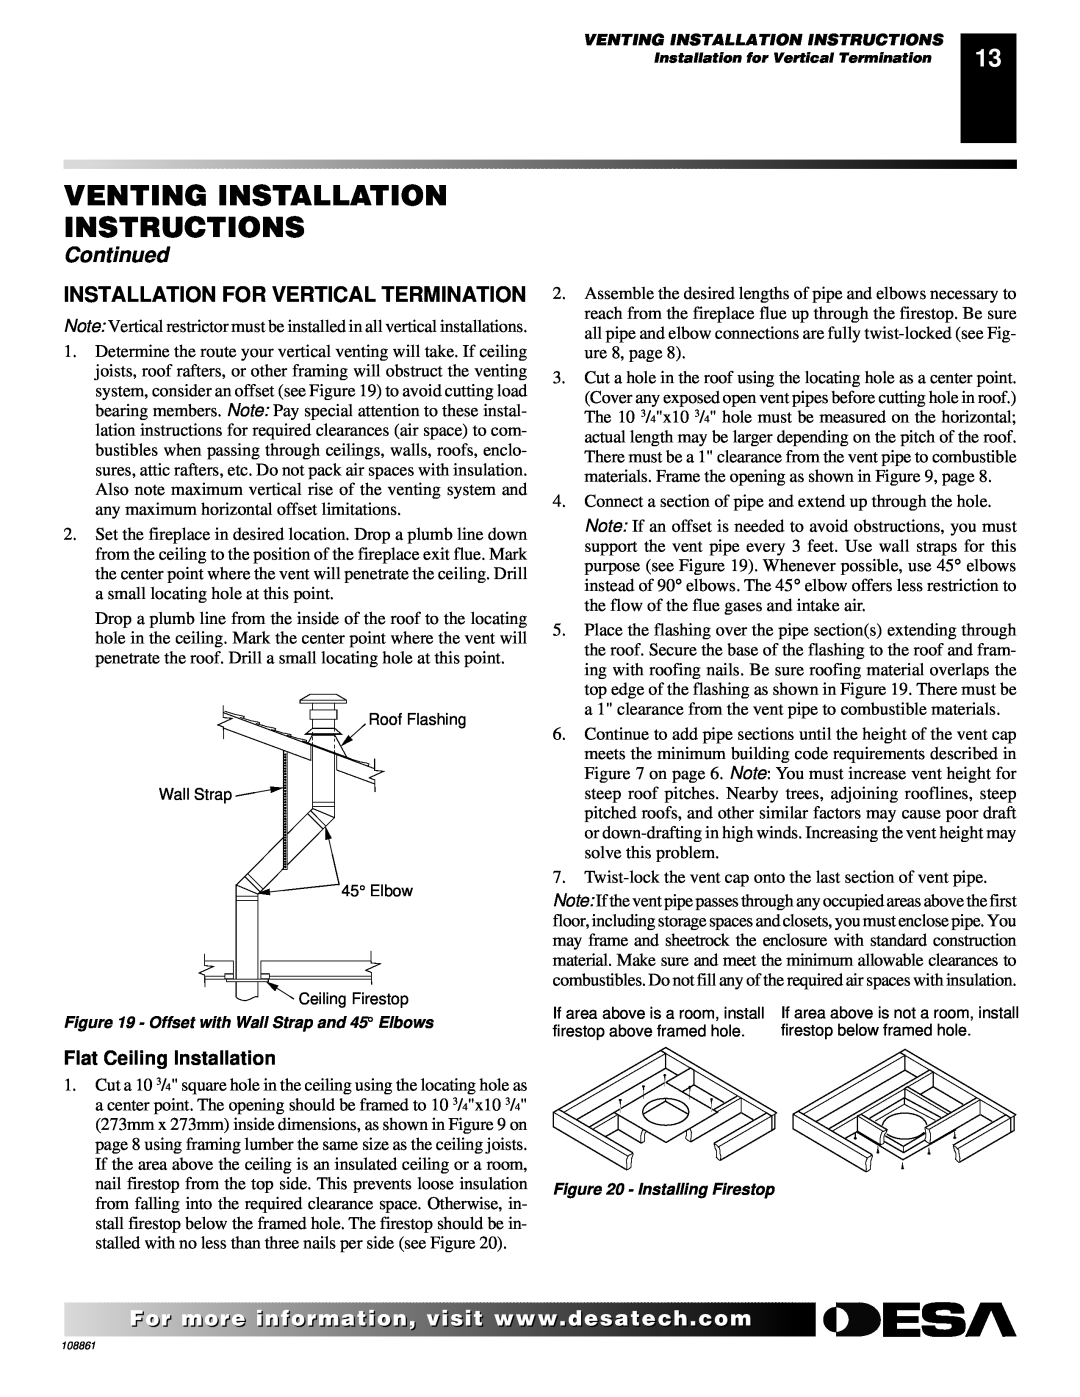 Desa CHDV47NR, (V)V36N Installation For Vertical Termination, Flat Ceiling Installation, Venting Installation Instructions 